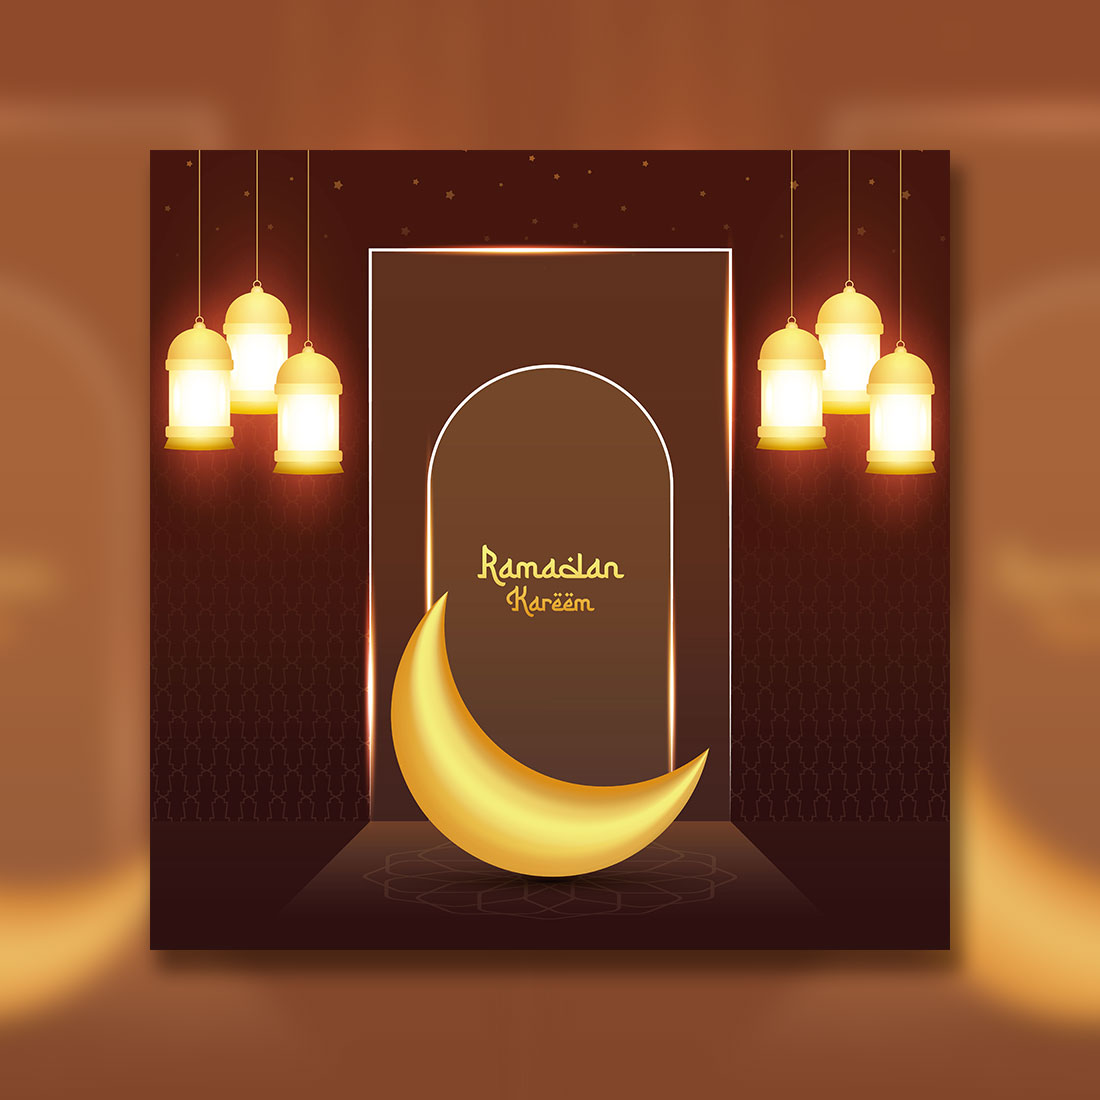 Ramadan Kareem greeting card with Islamic background cover image.